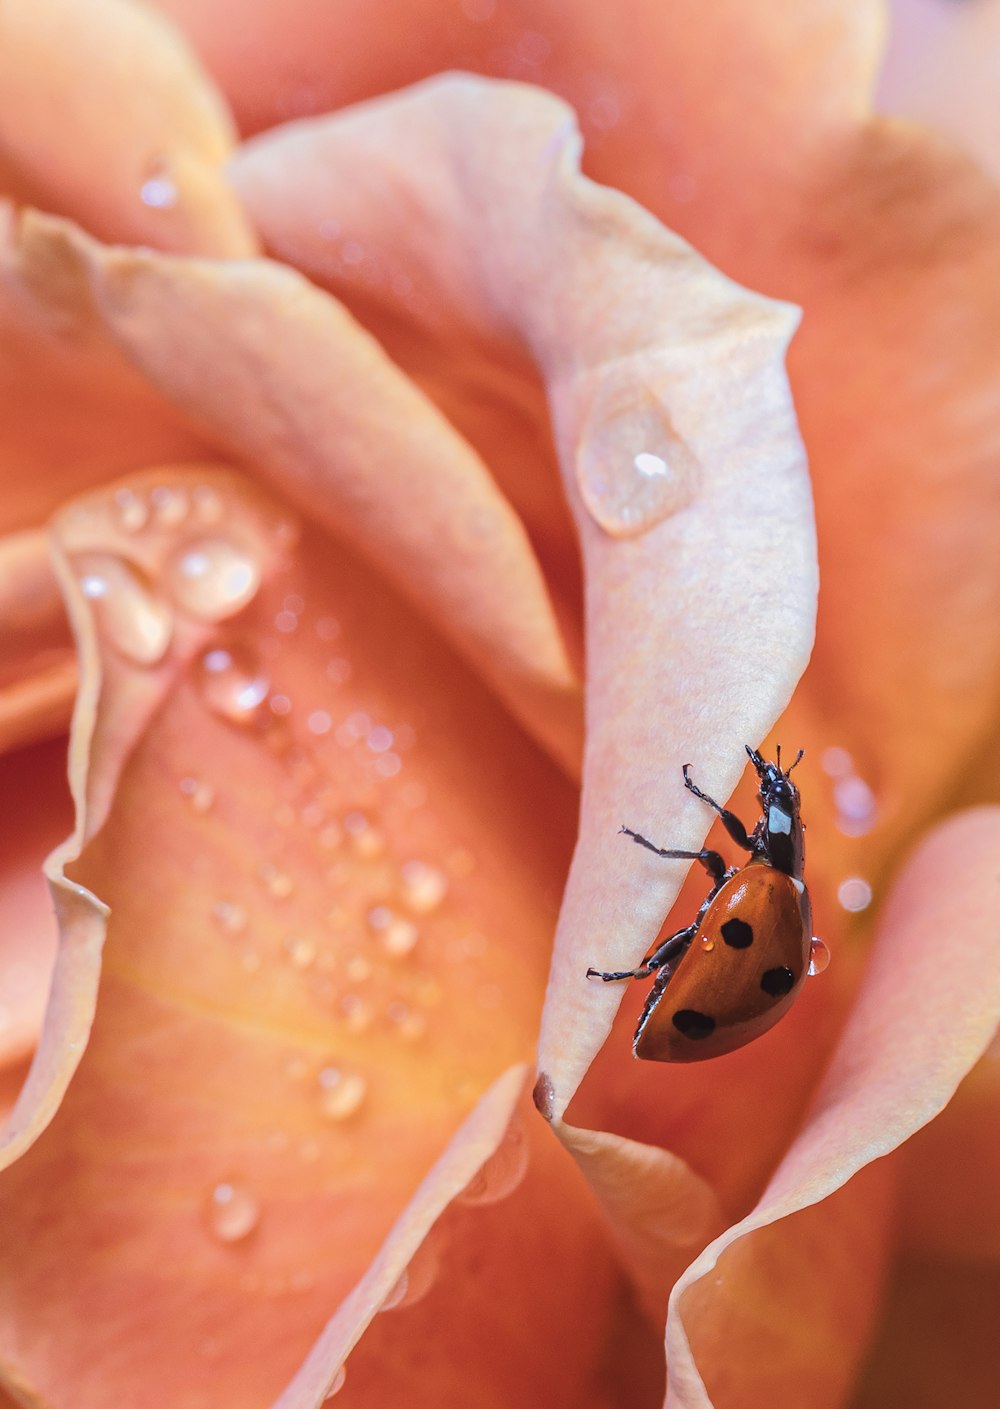 black and orange ladybug on pink flower petals